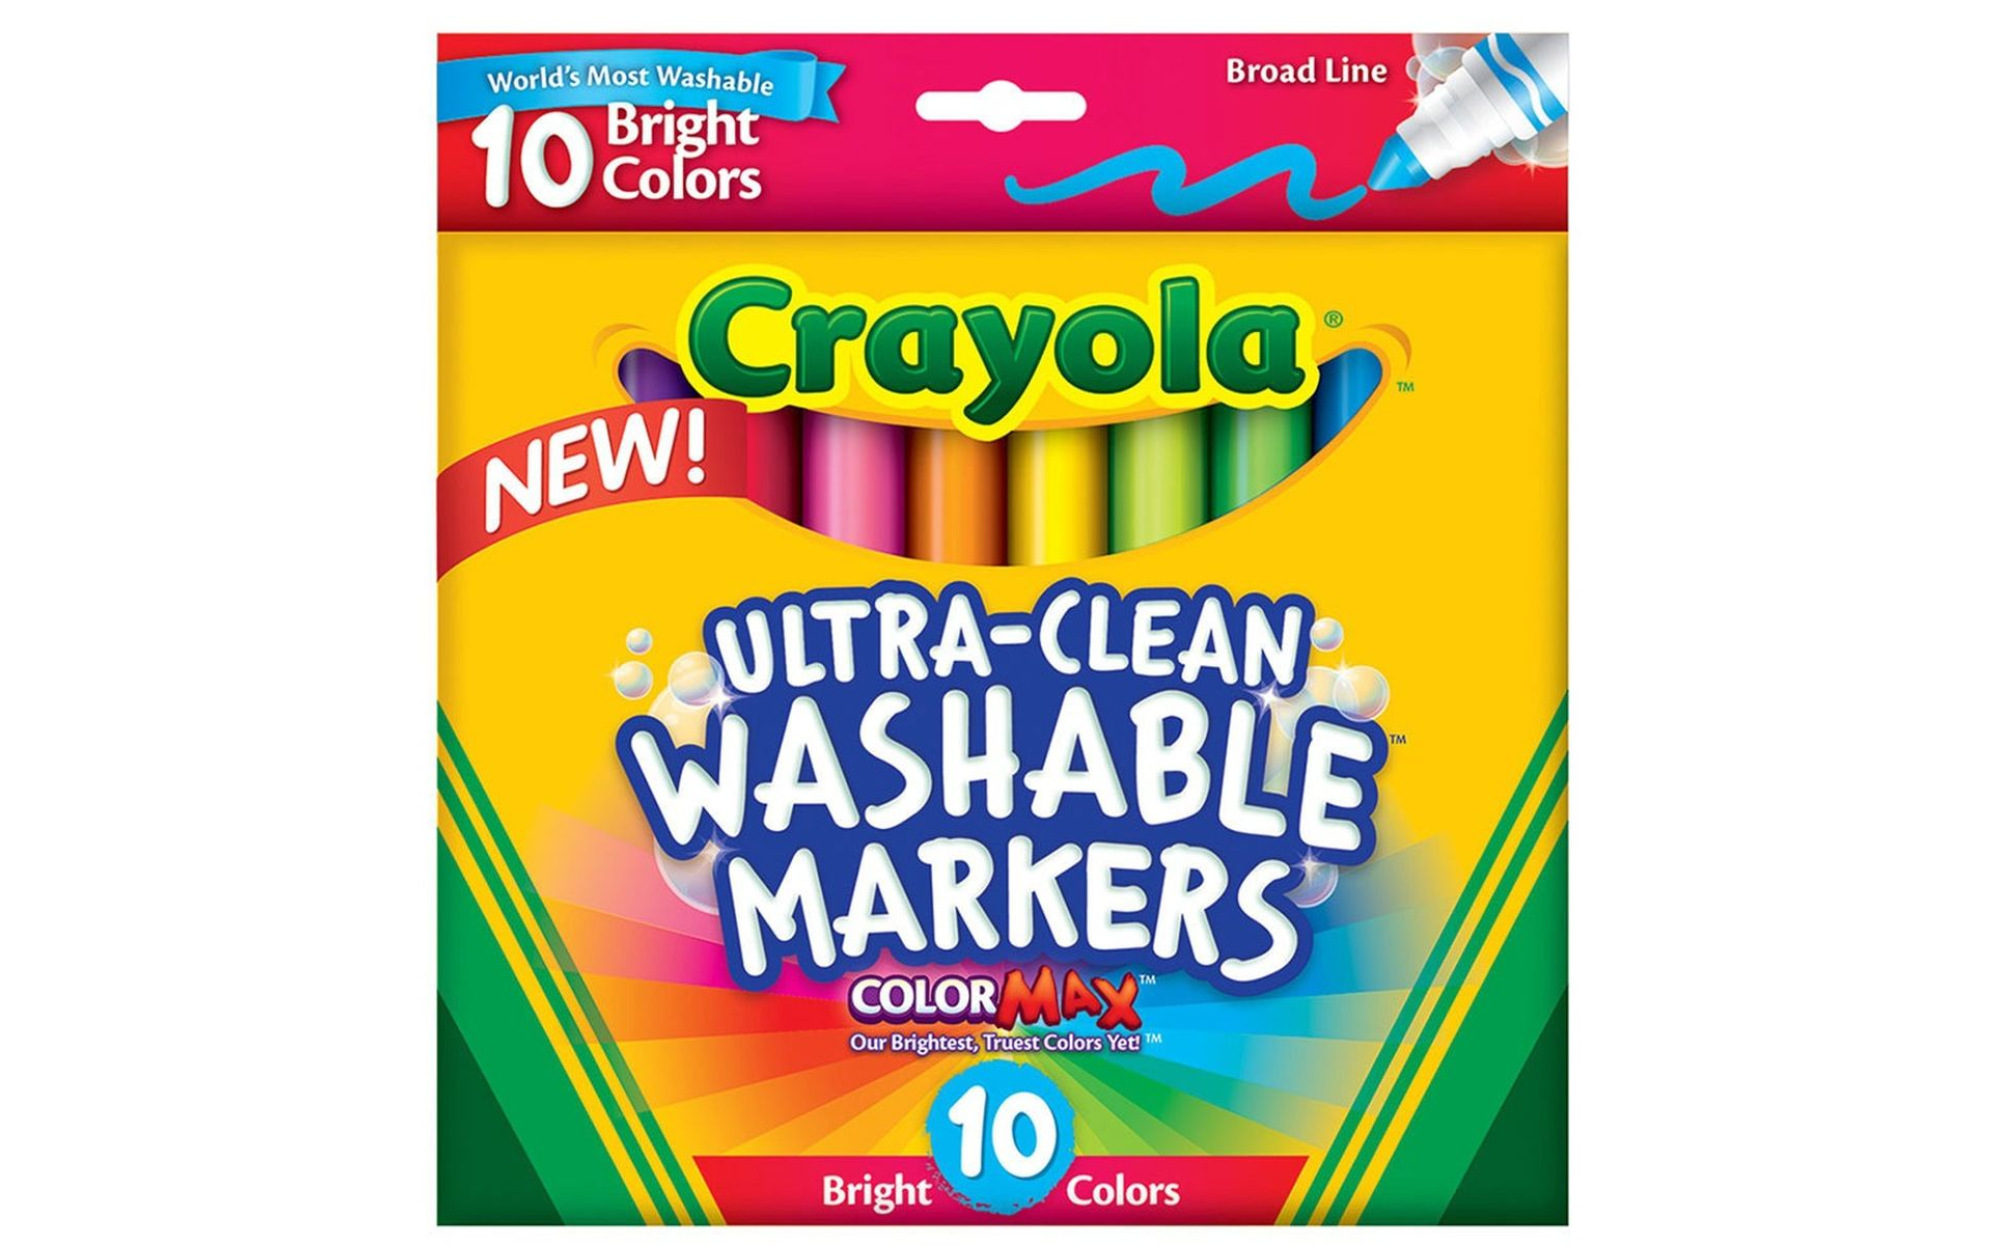 Crayola Marker Maker Craft Kit Only $10.49 on